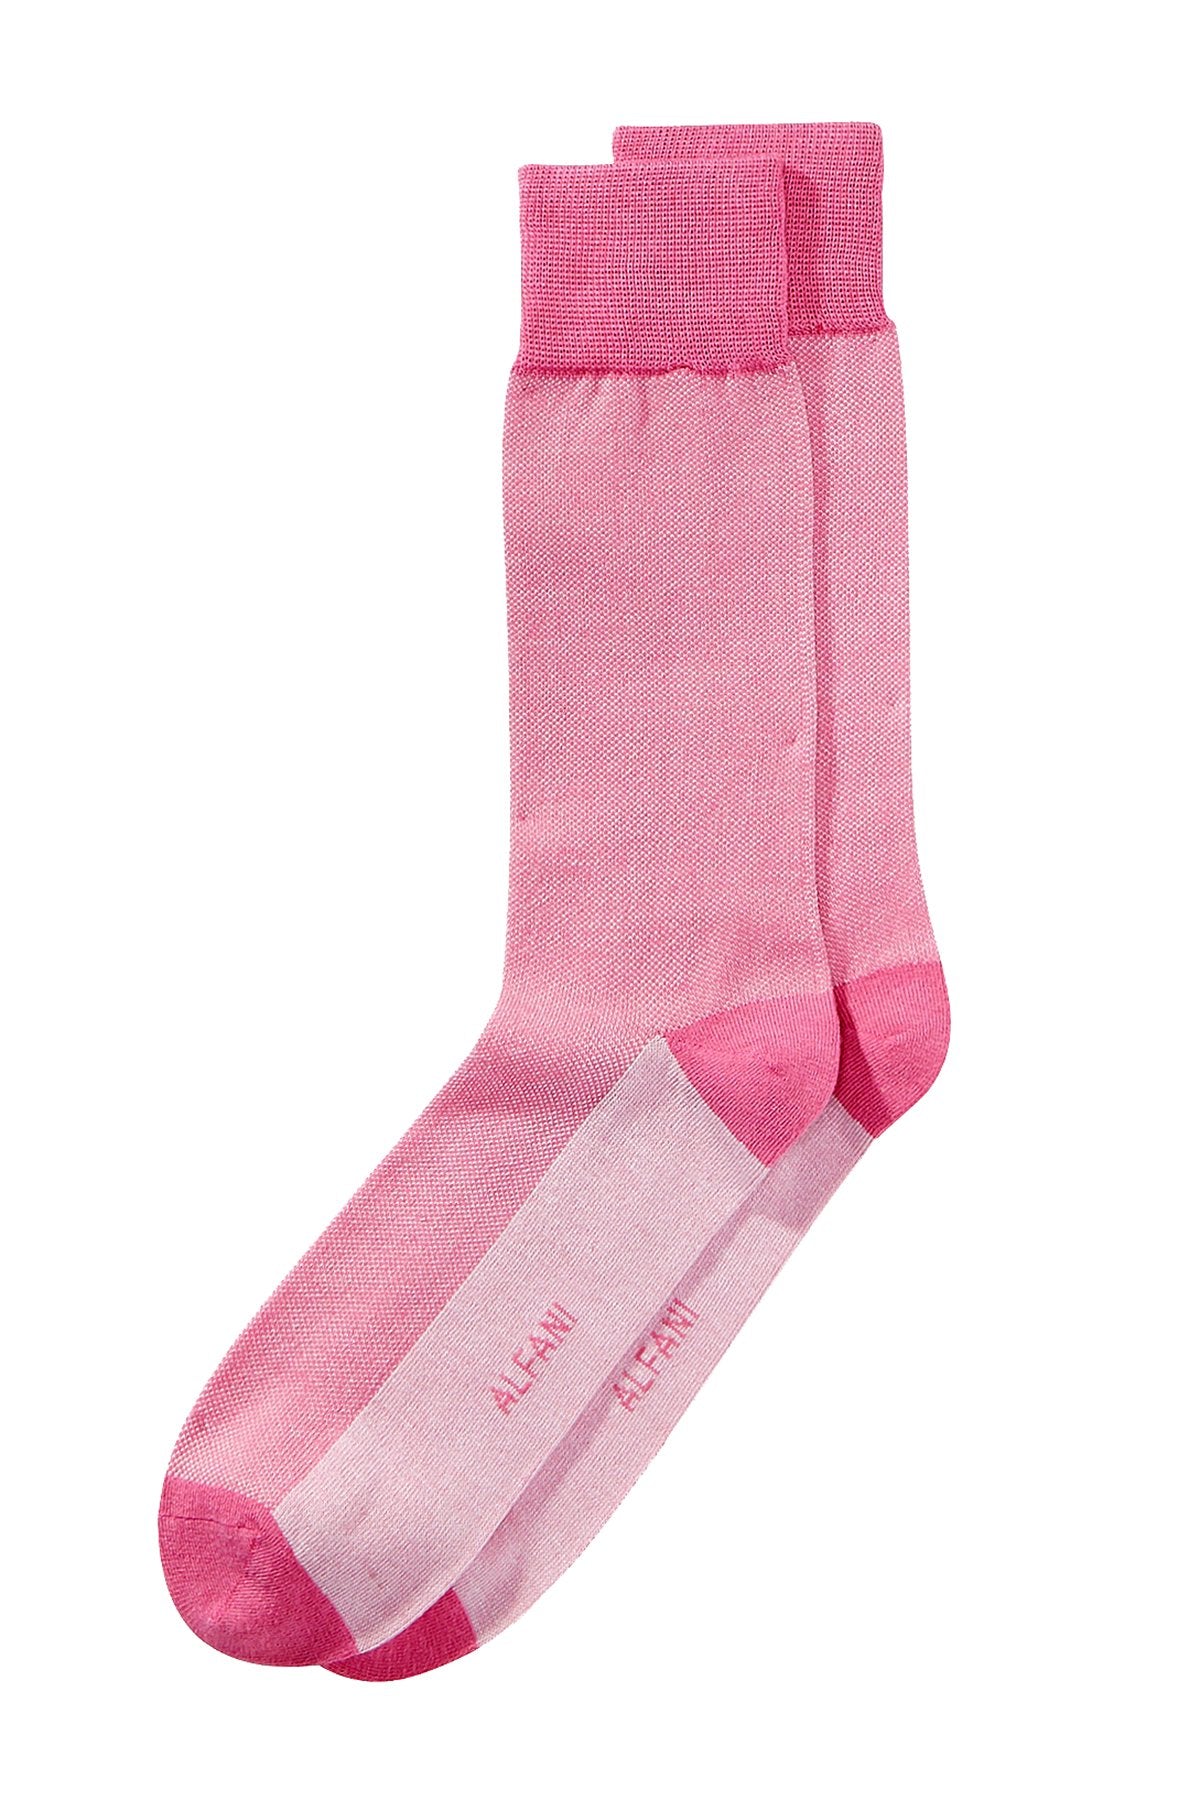 Alfani Pink Piqué Solid Dress Socks